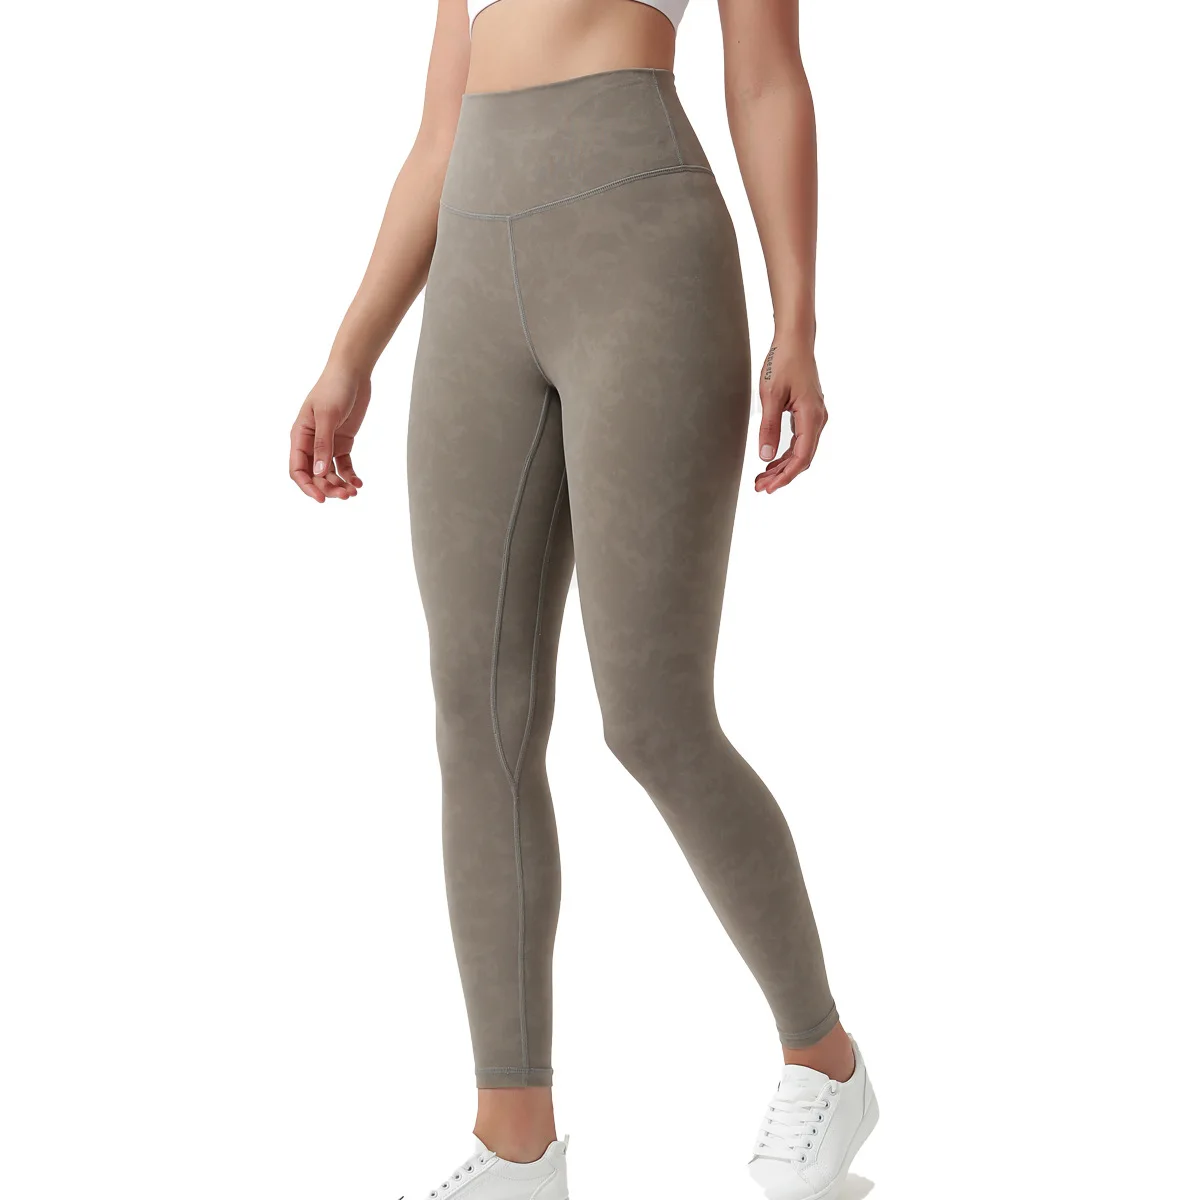 Female align Yoga Pants women's sports high waist hip lift printed Yoga Leggings Women seamless Tights Tie dye activewear